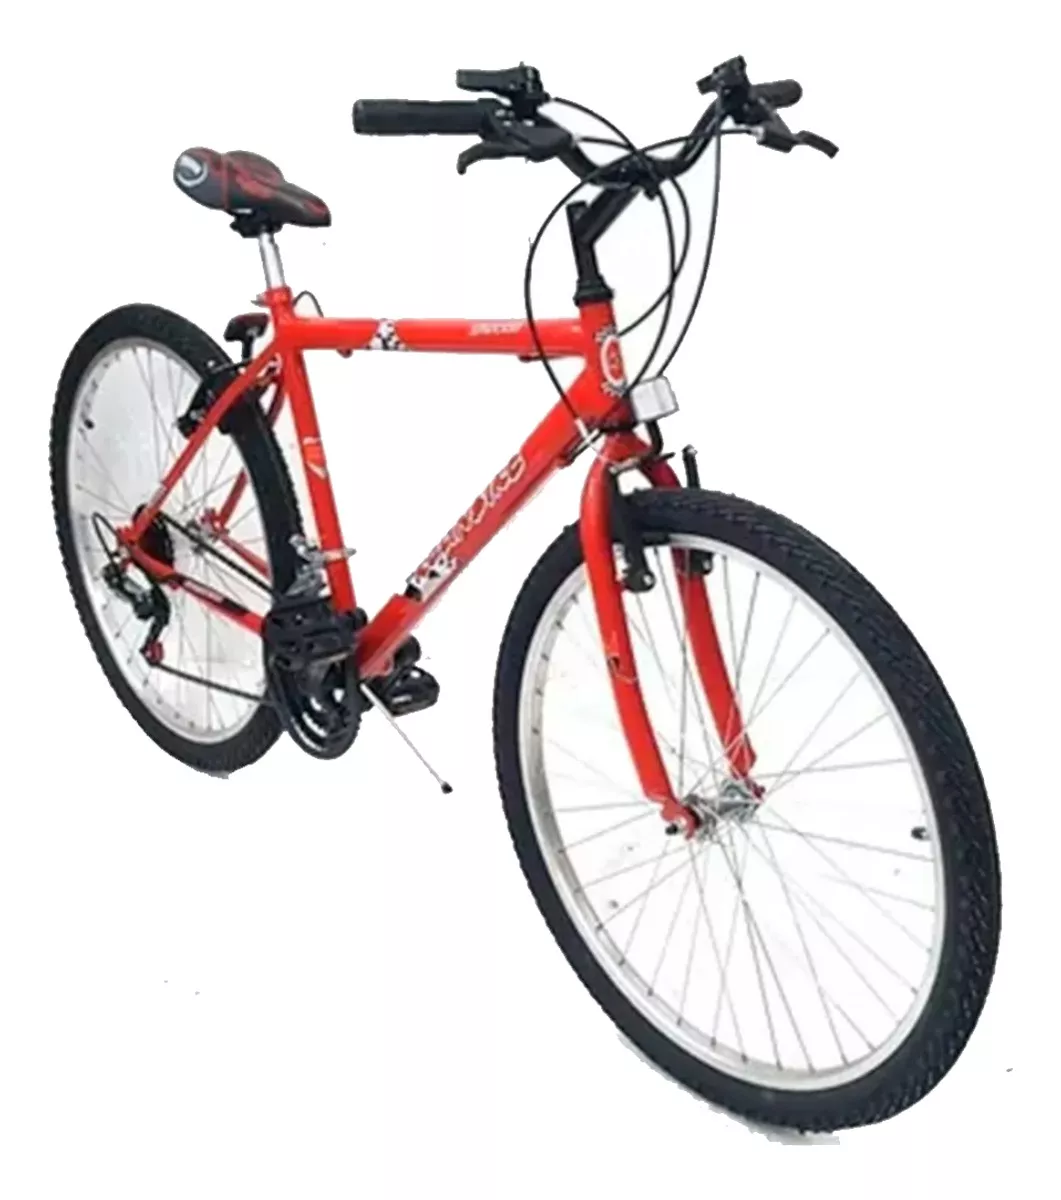 Segunda imagen para búsqueda de bicicleta kelinbike rodado 26 mountain bike